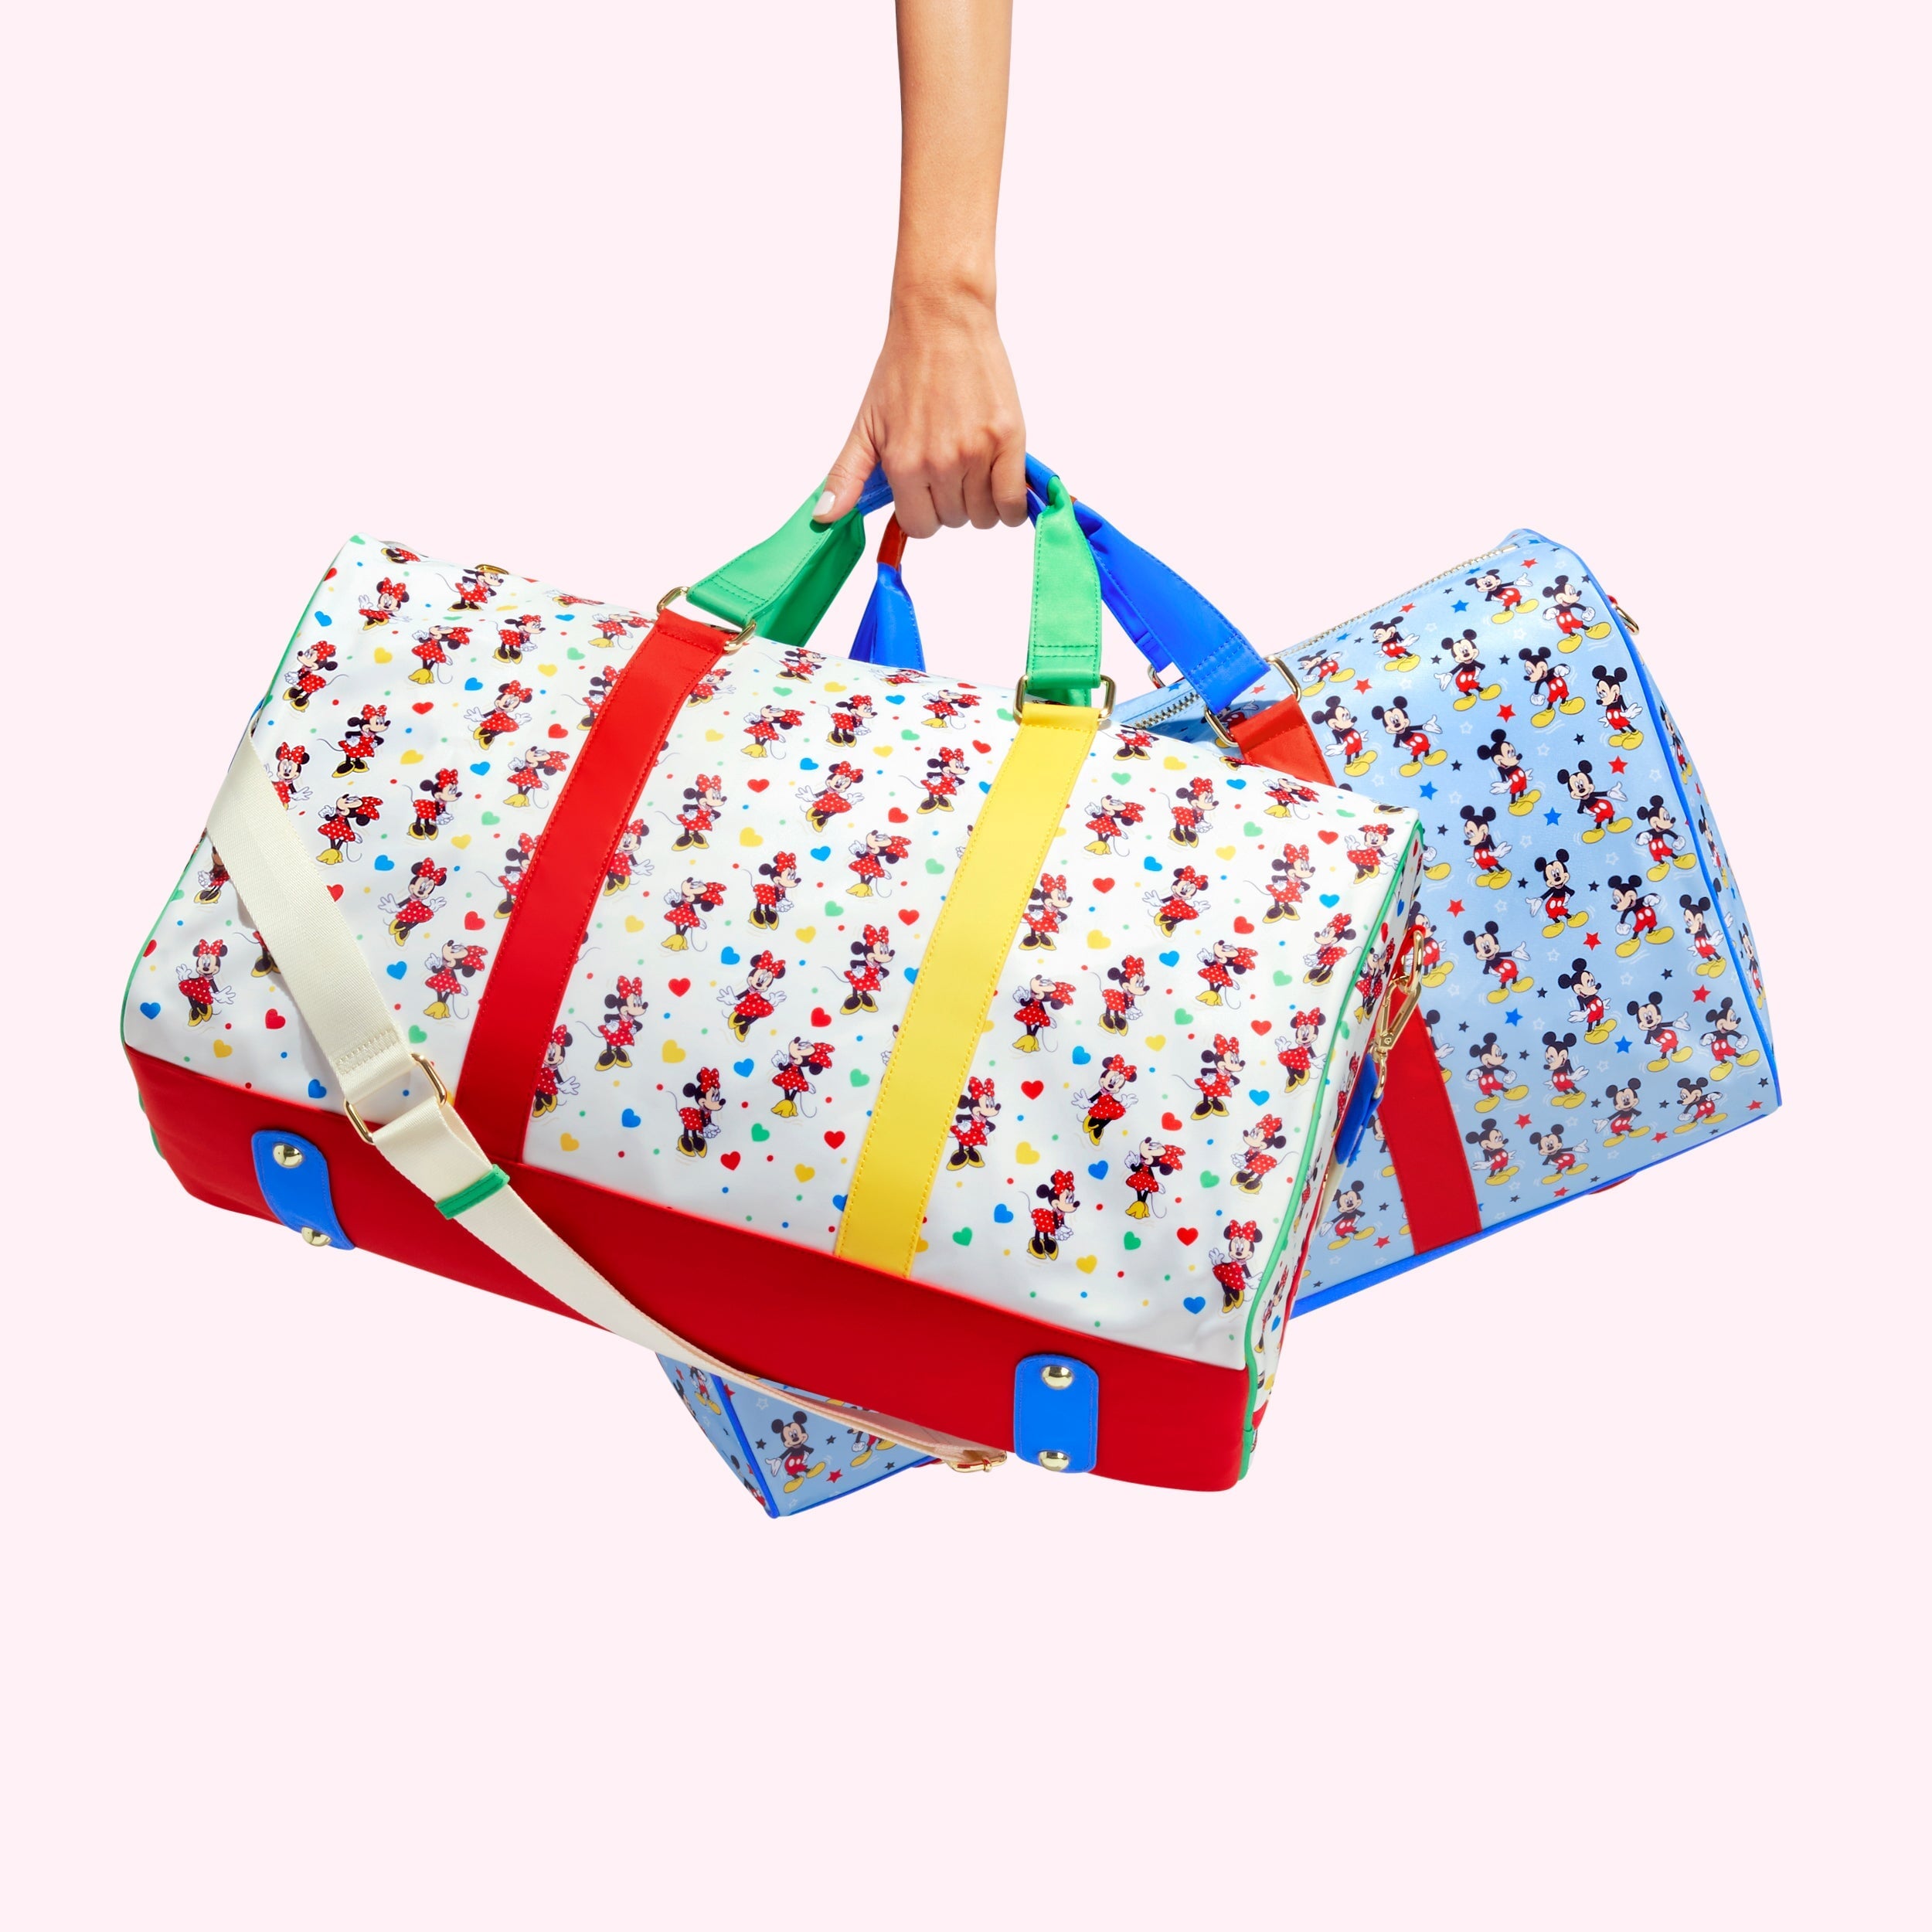 Stoney Clover Lane Bags | Stoney Clover Lane Mini Duffle Bag - Peach | Color: Orange | Size: 10 H x 18.5 L x 7.3 D | Poshggp's Closet